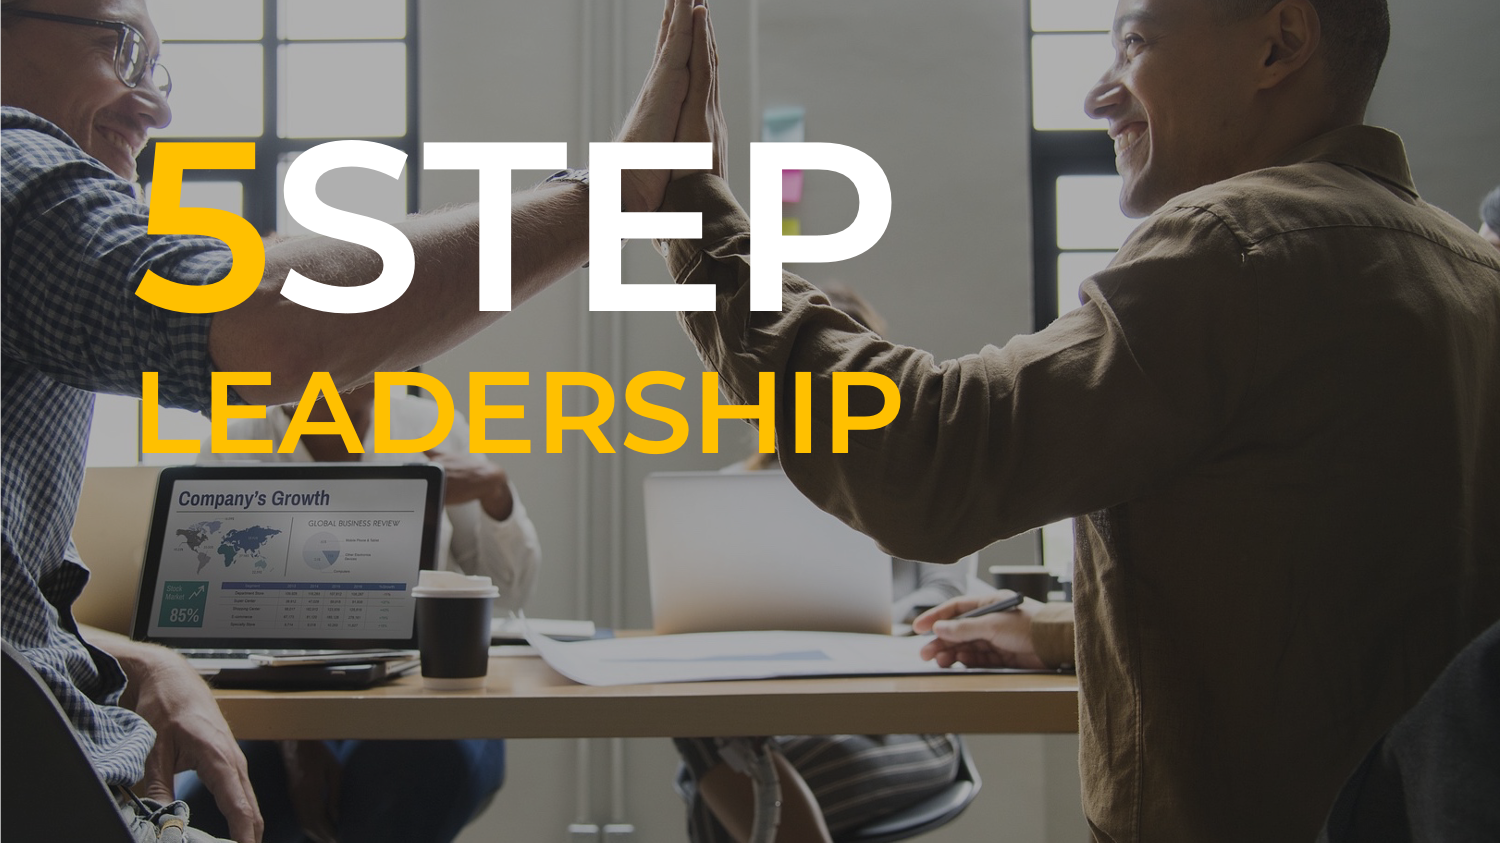 5STEP-Leadership _Header _HIGHFIVE.png